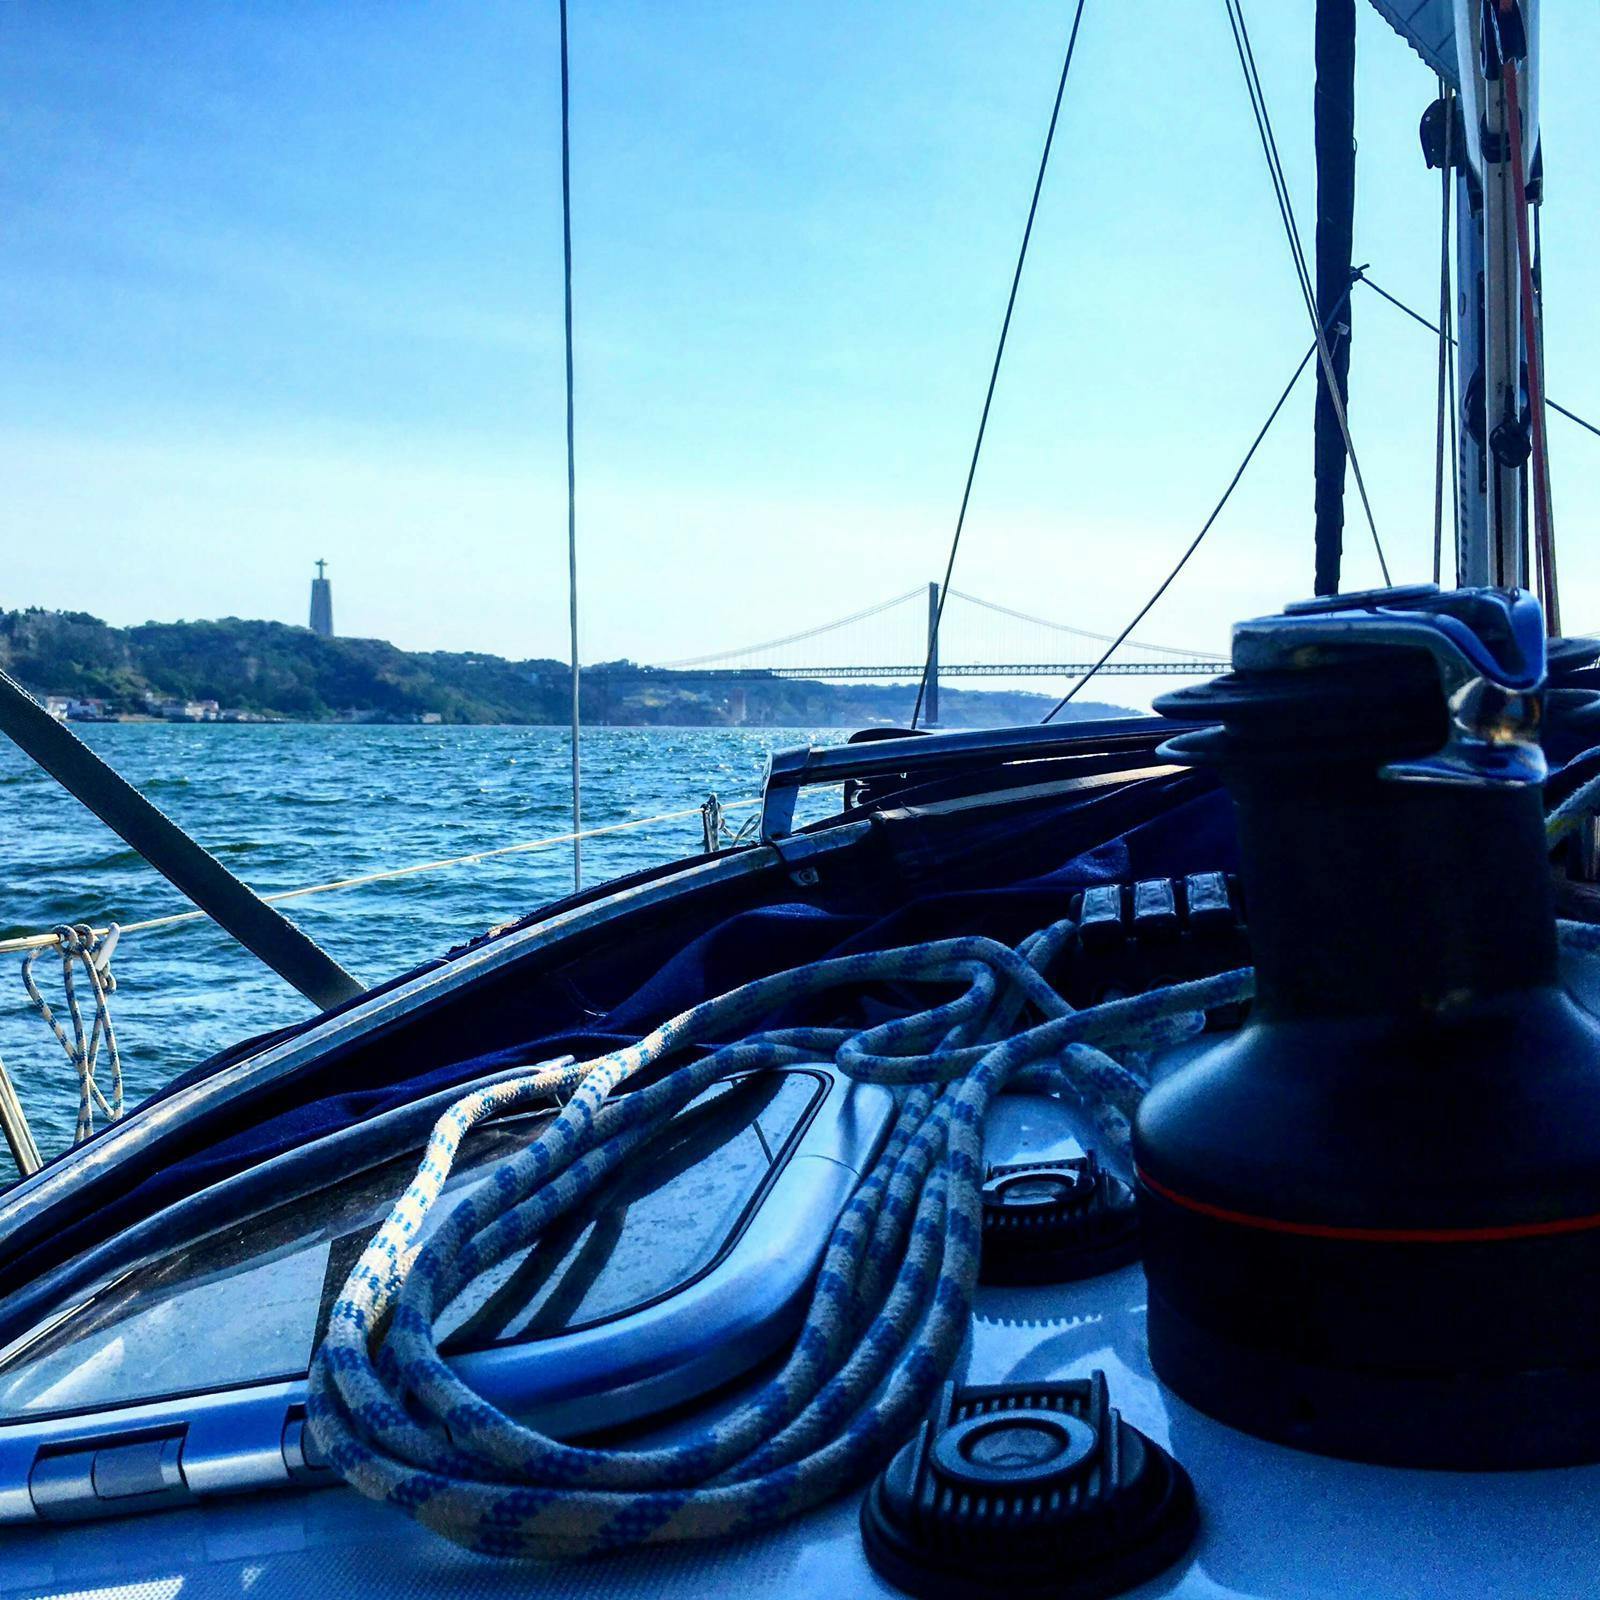 Tour mattutino in barca a vela di Lisbona